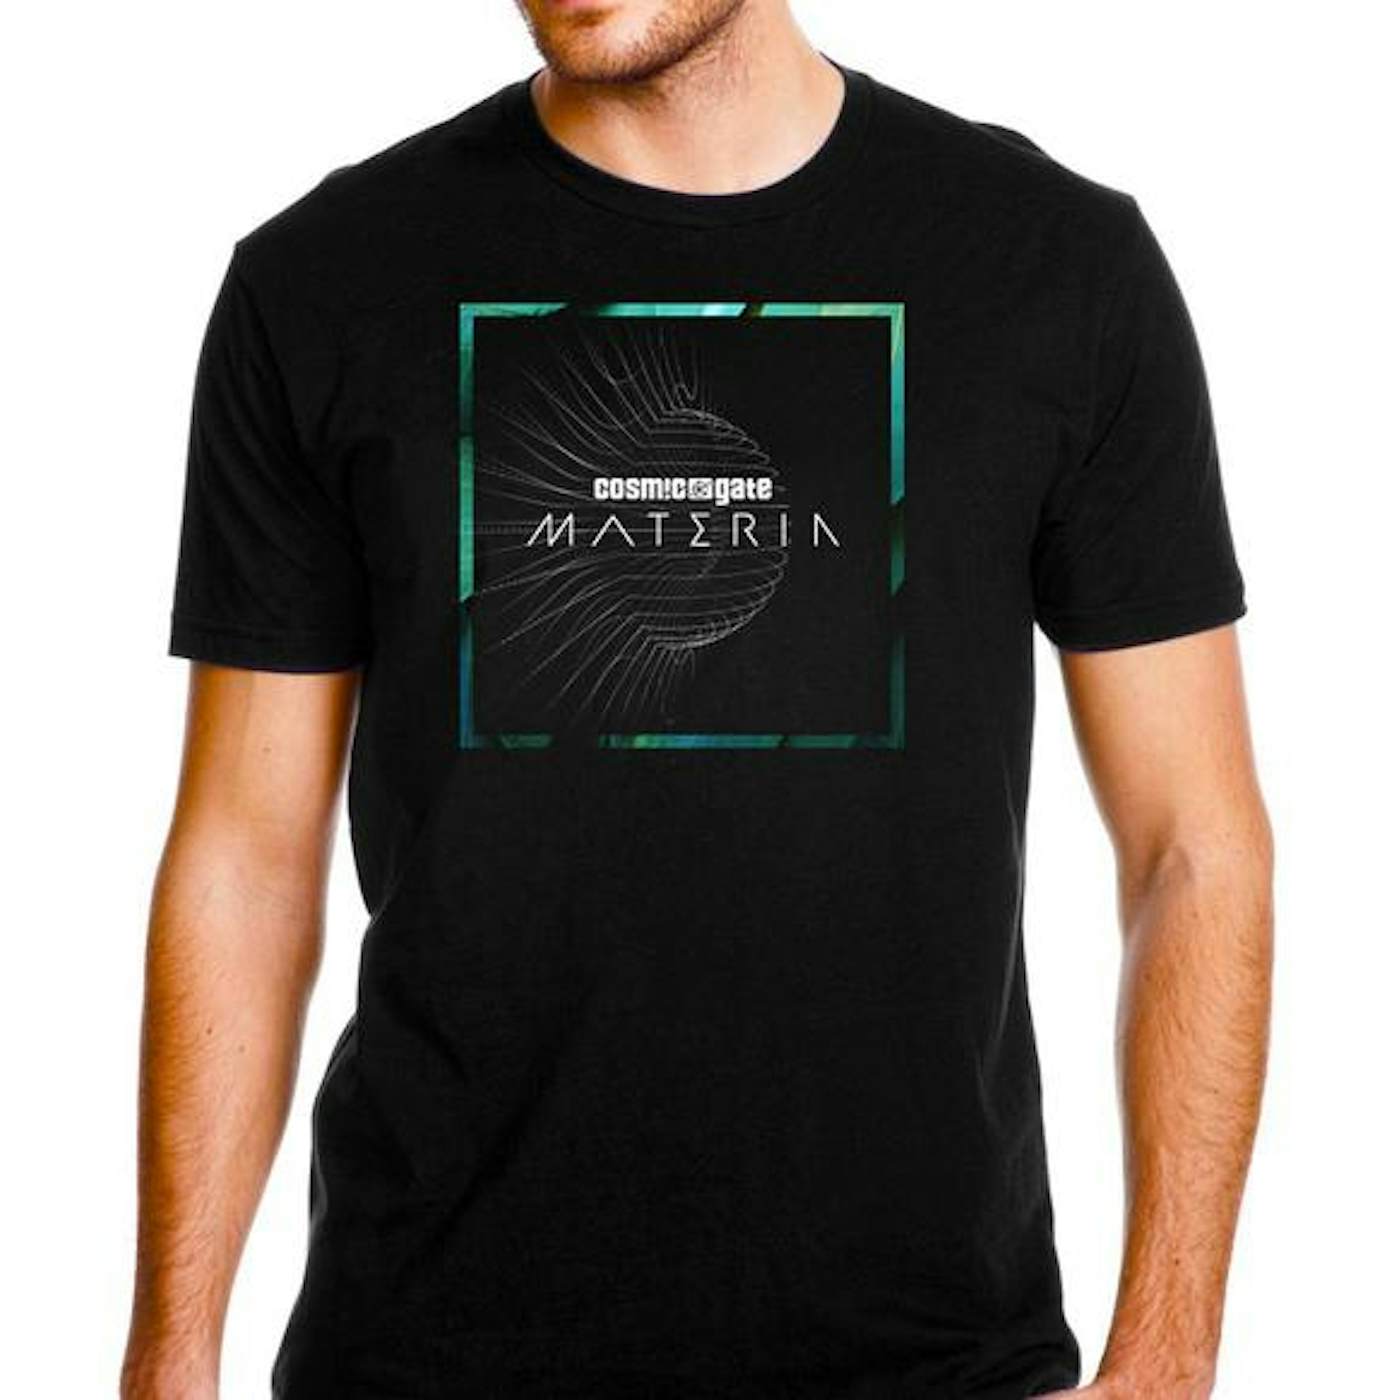 Cosmic Gate - Materia Black Shirt